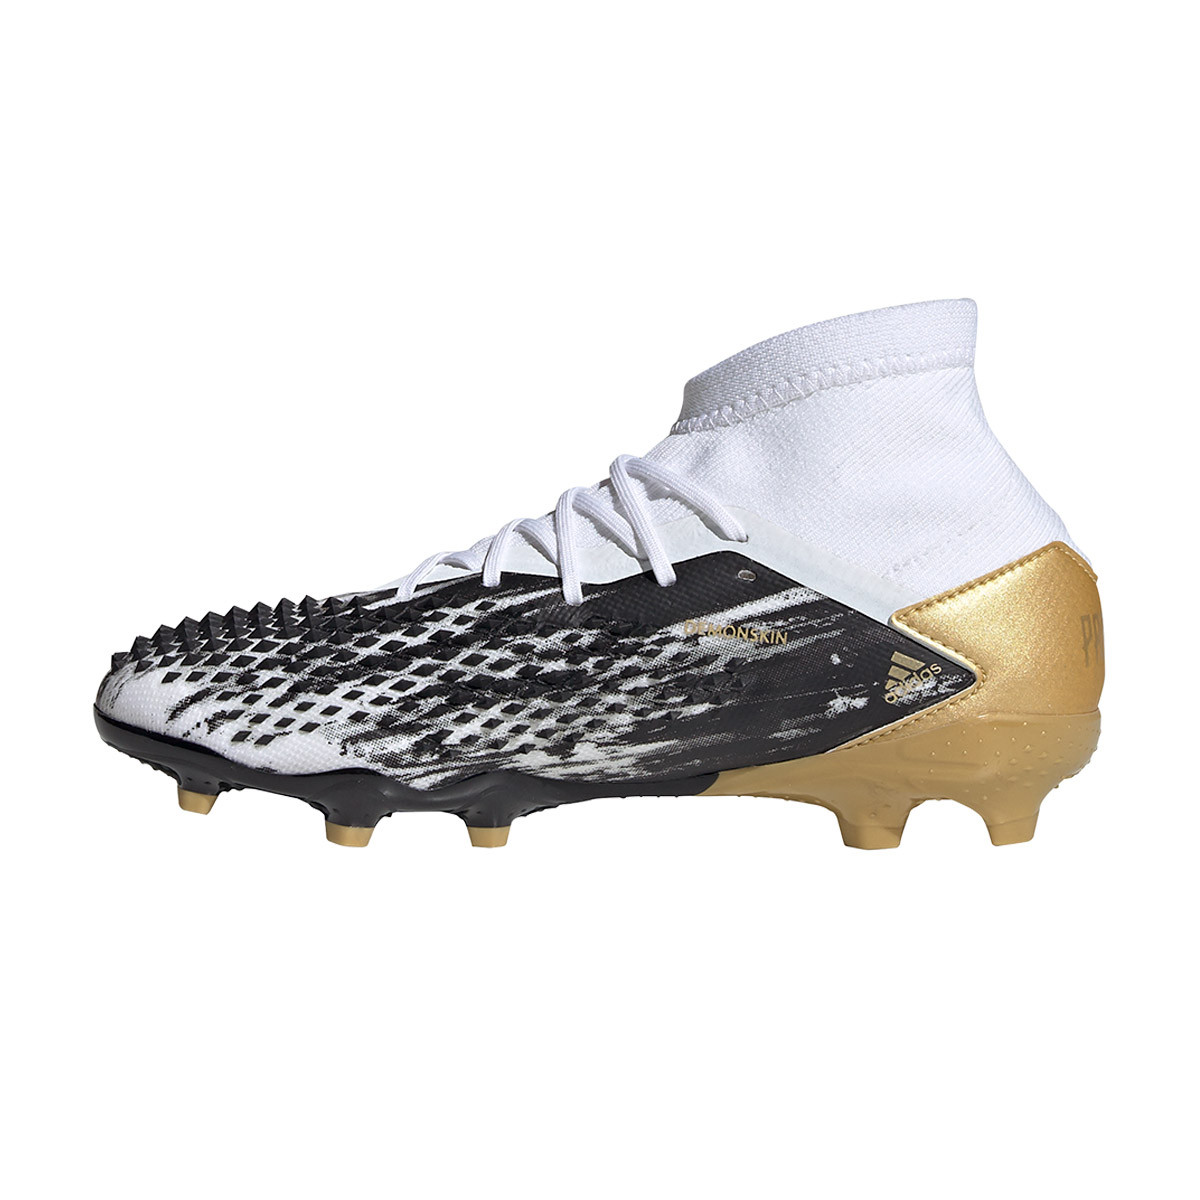 adidas predator junior boots OFF71% www.otinet.ir!